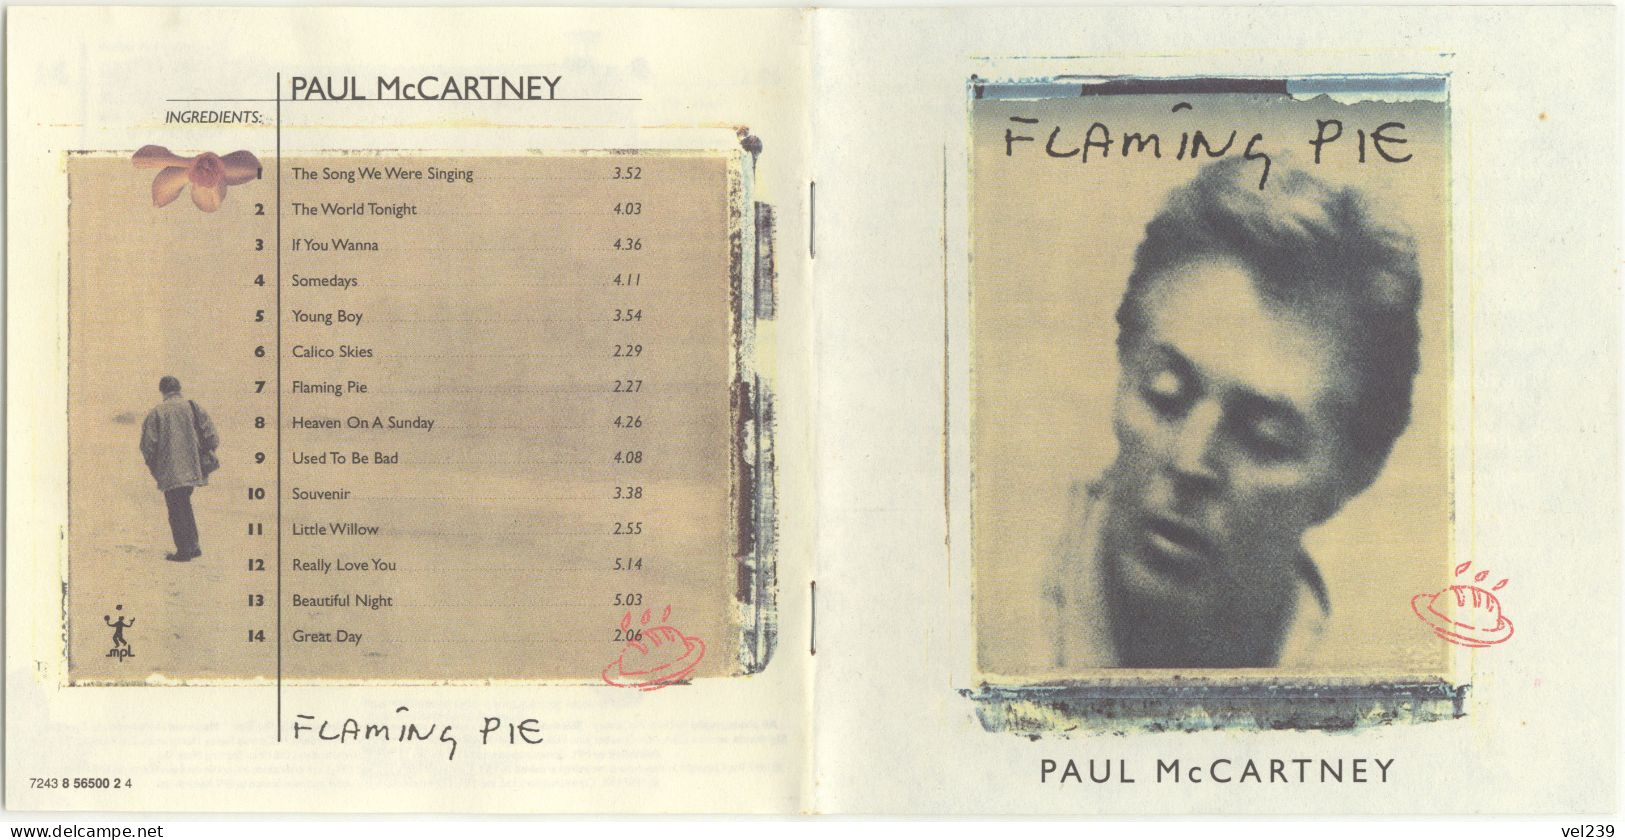 Paul McCartney. Flaming Pie - Rock